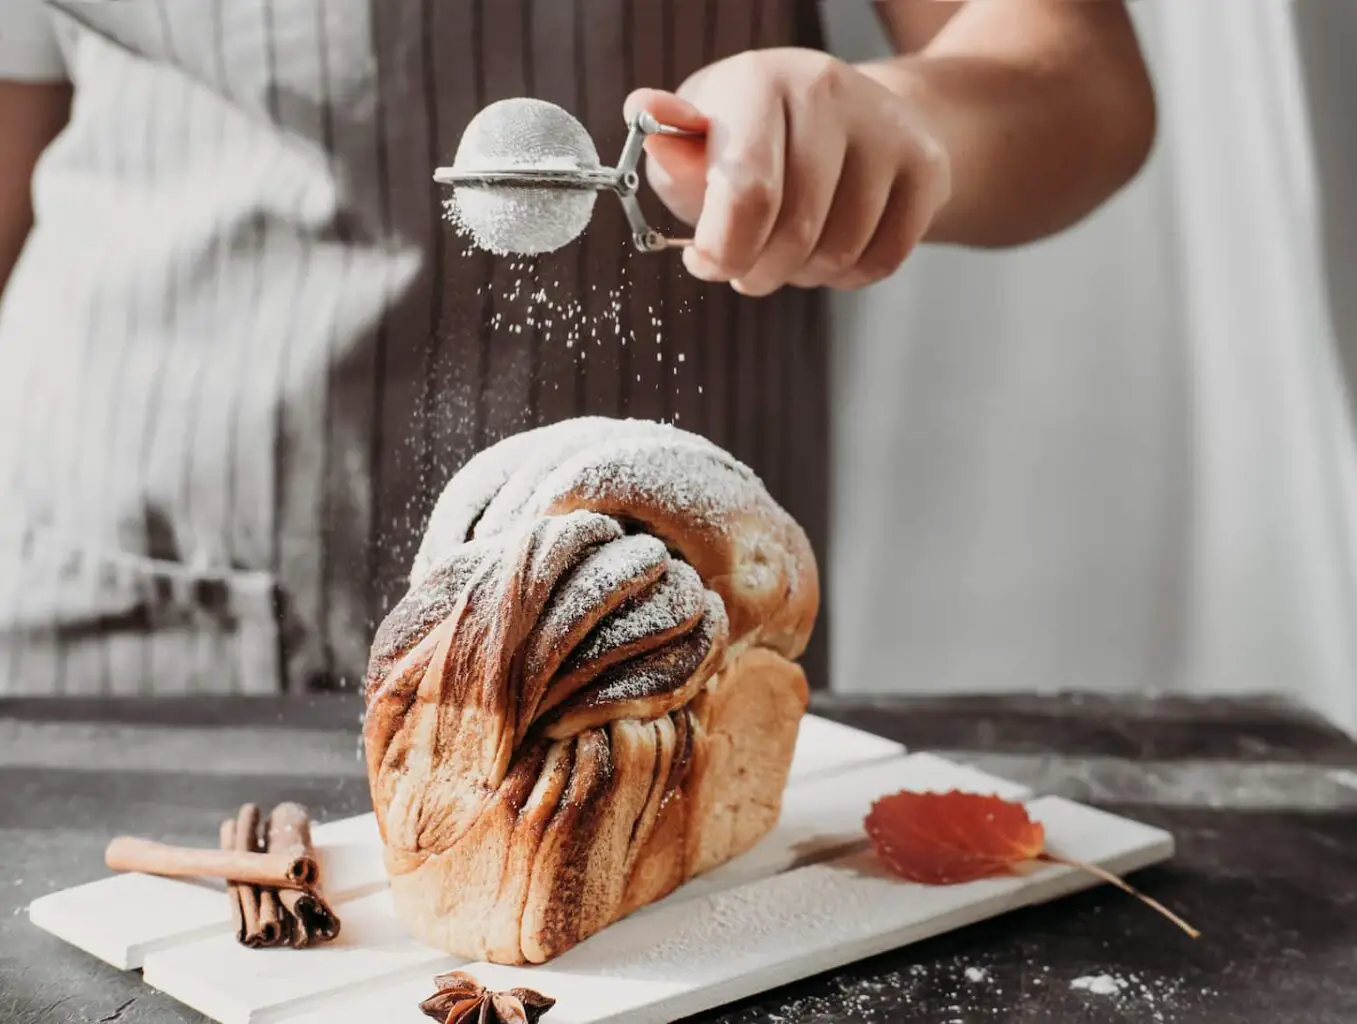 An image of an artisan sourdough cinnamon swirl bread on a wooden rack.